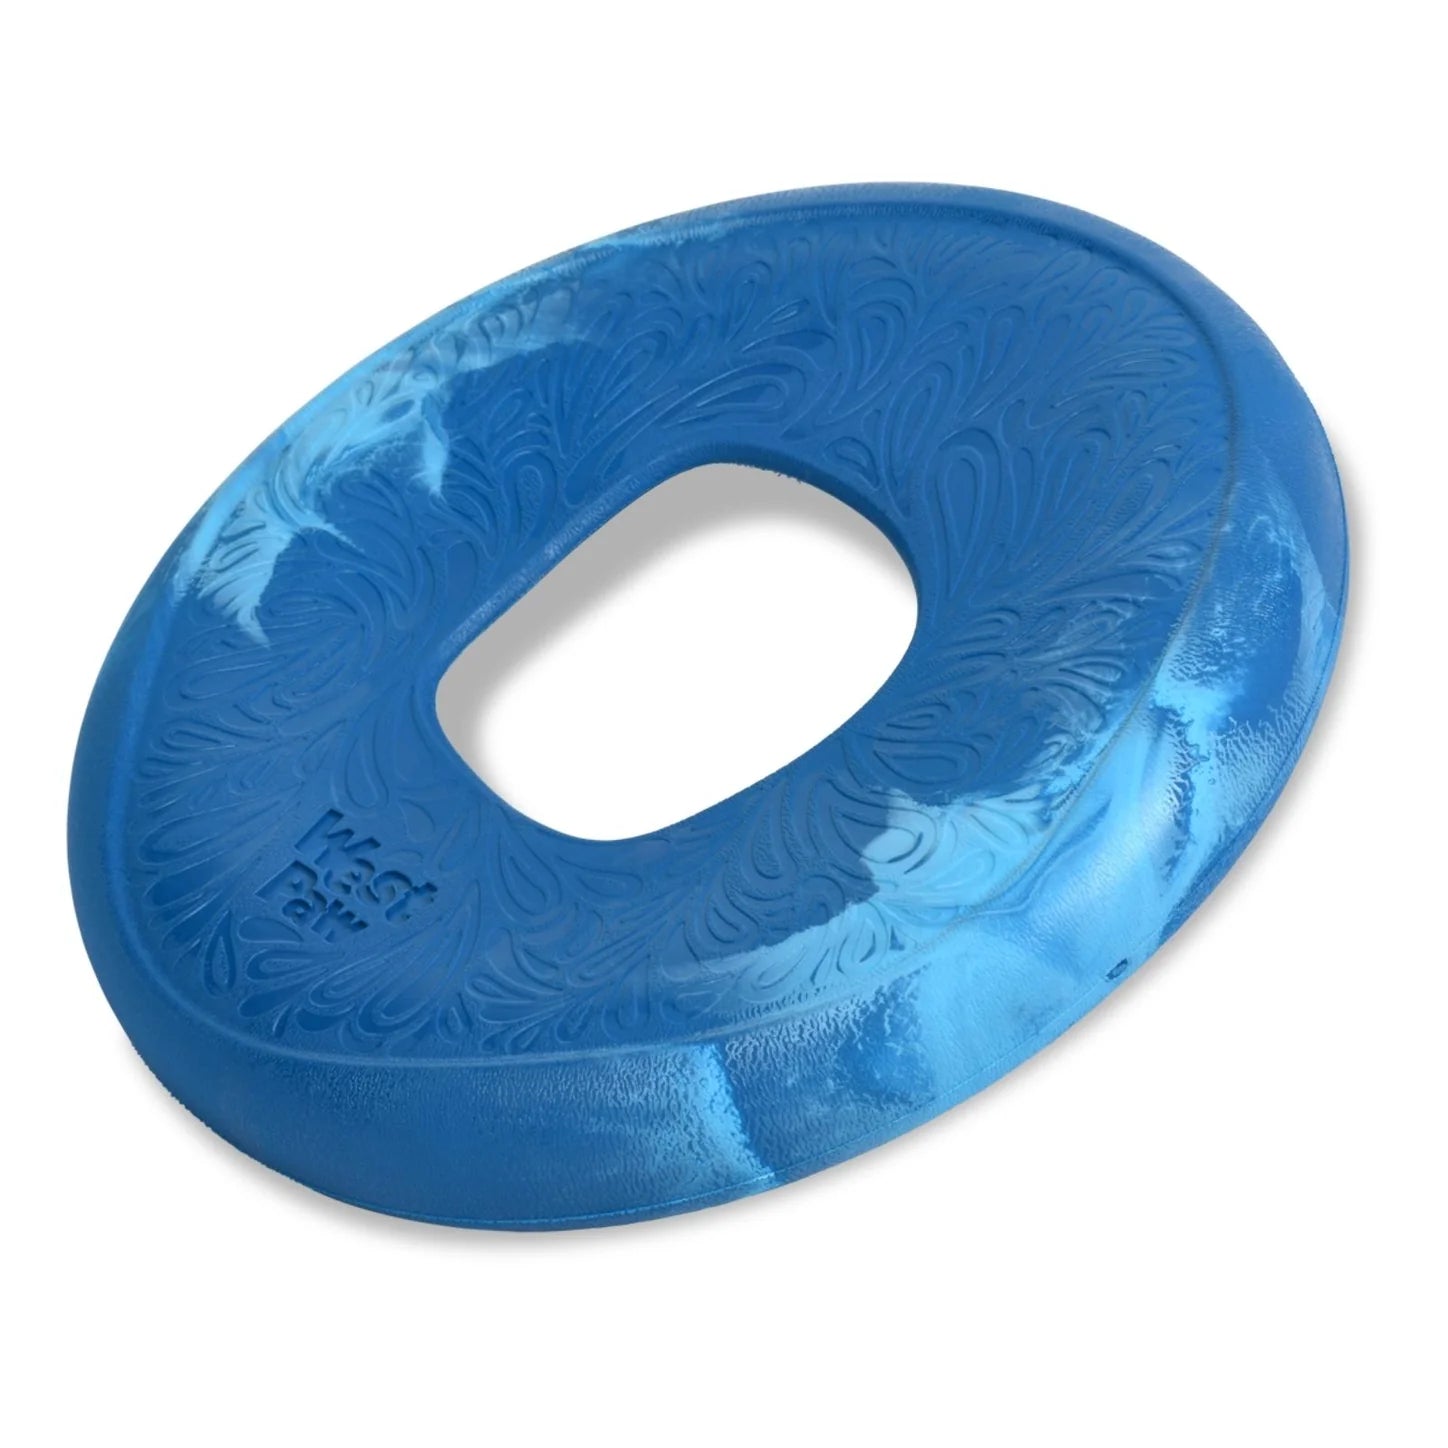 Kit de Juego Seaflex de West Paw: Drifty Magenta + Snorkl Verde Esmeralda + Sailz Azul Surf